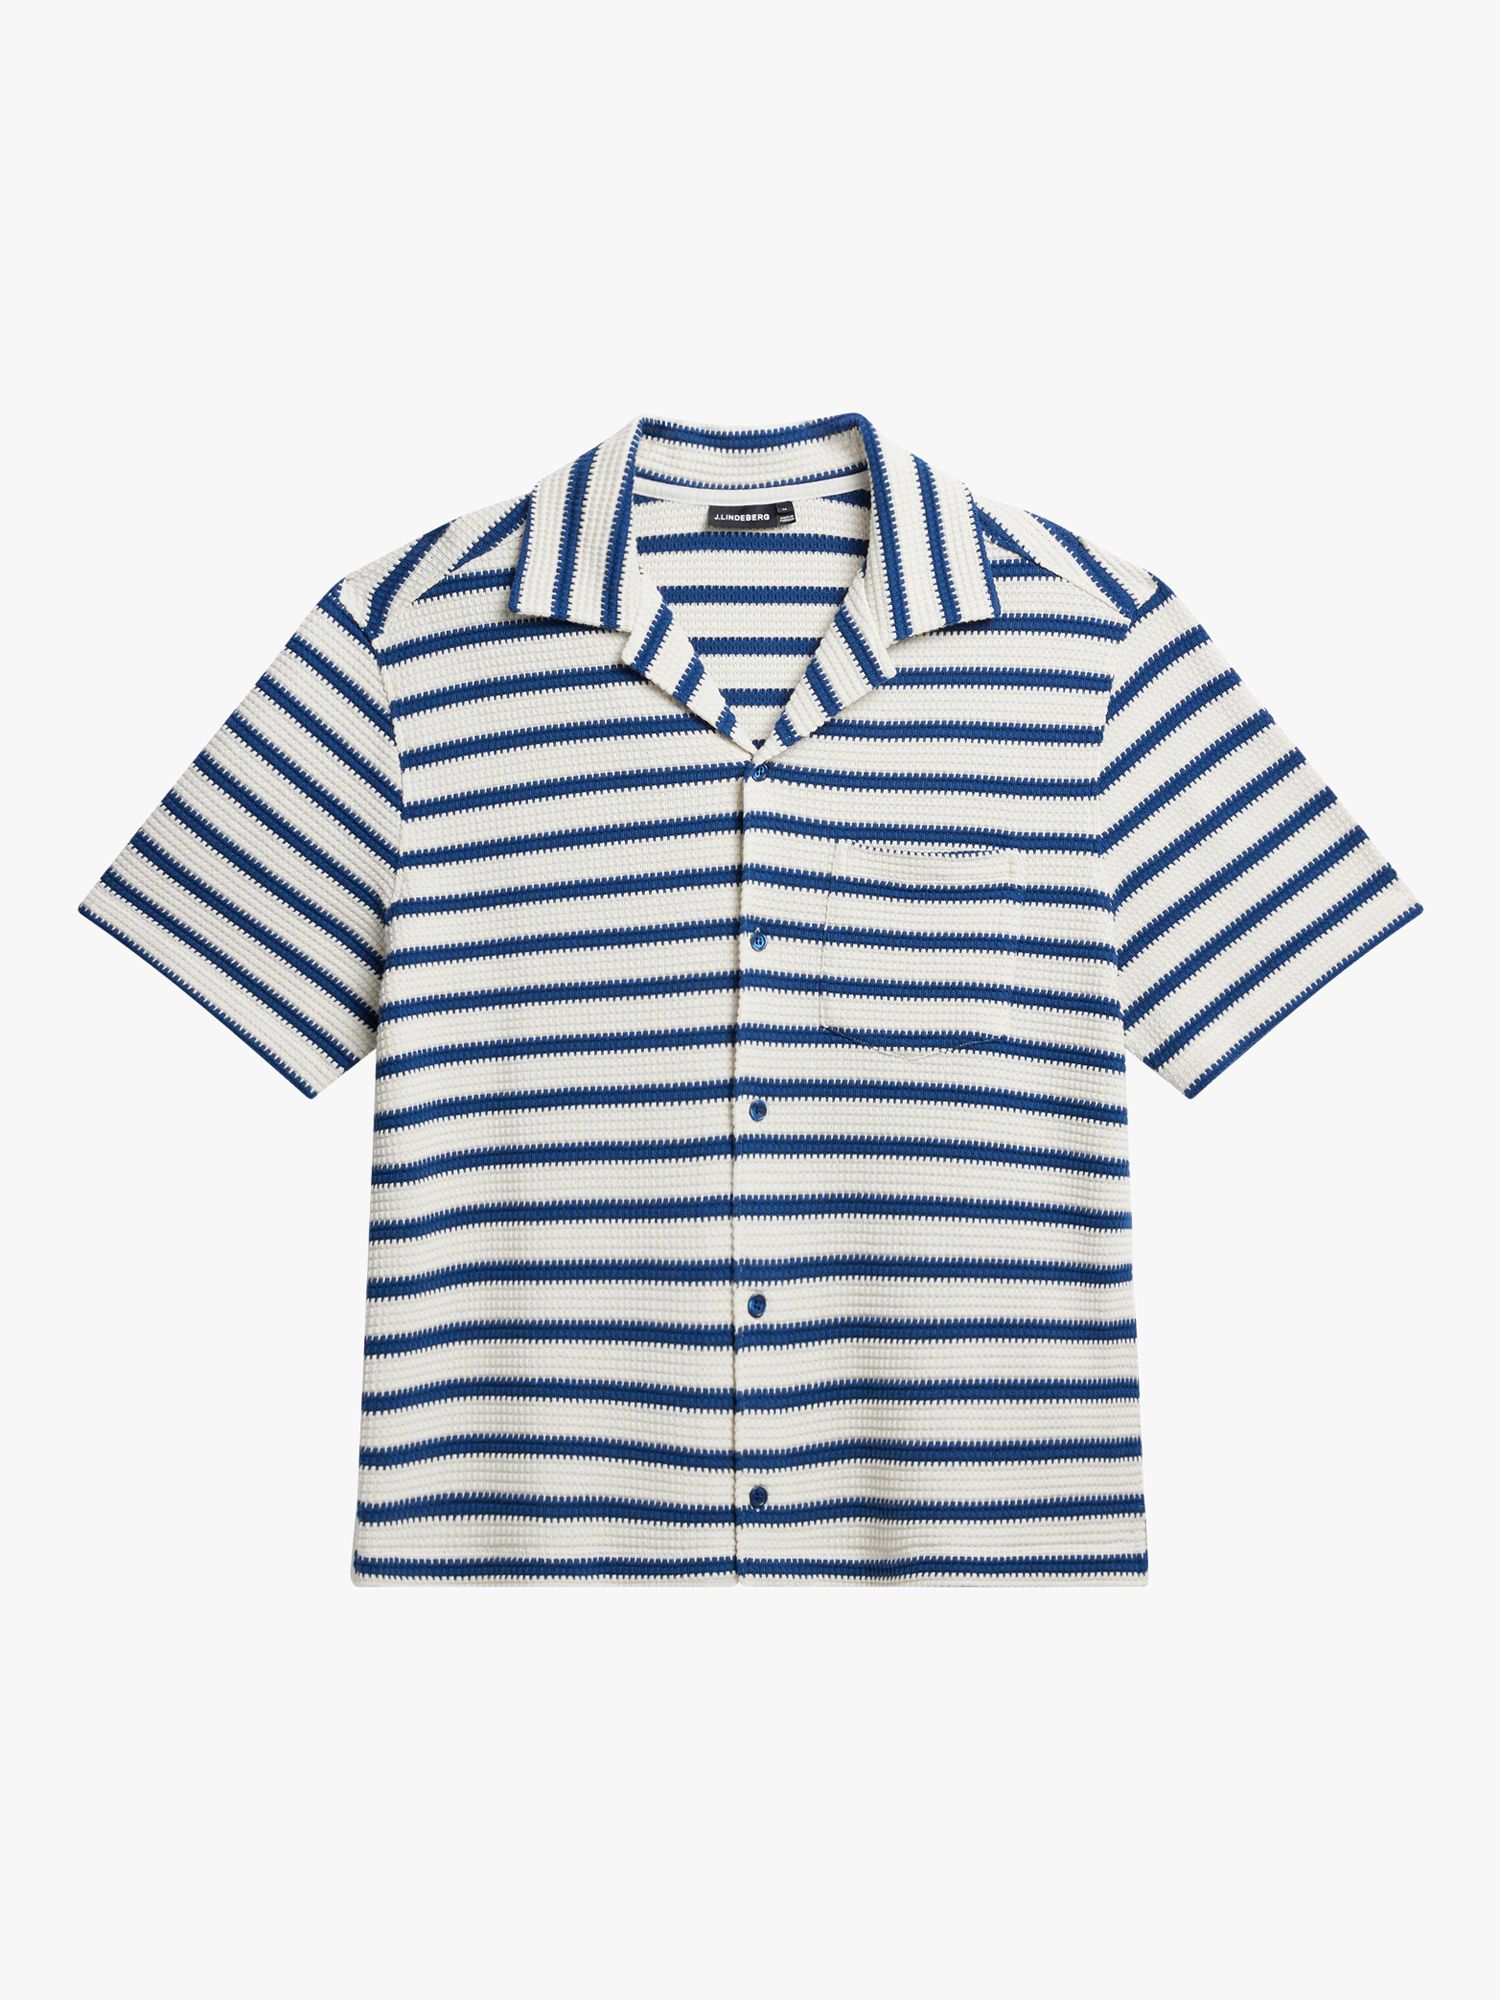 J.Lindeberg Tiro Resort Stripe Shirt, Blue/White, L